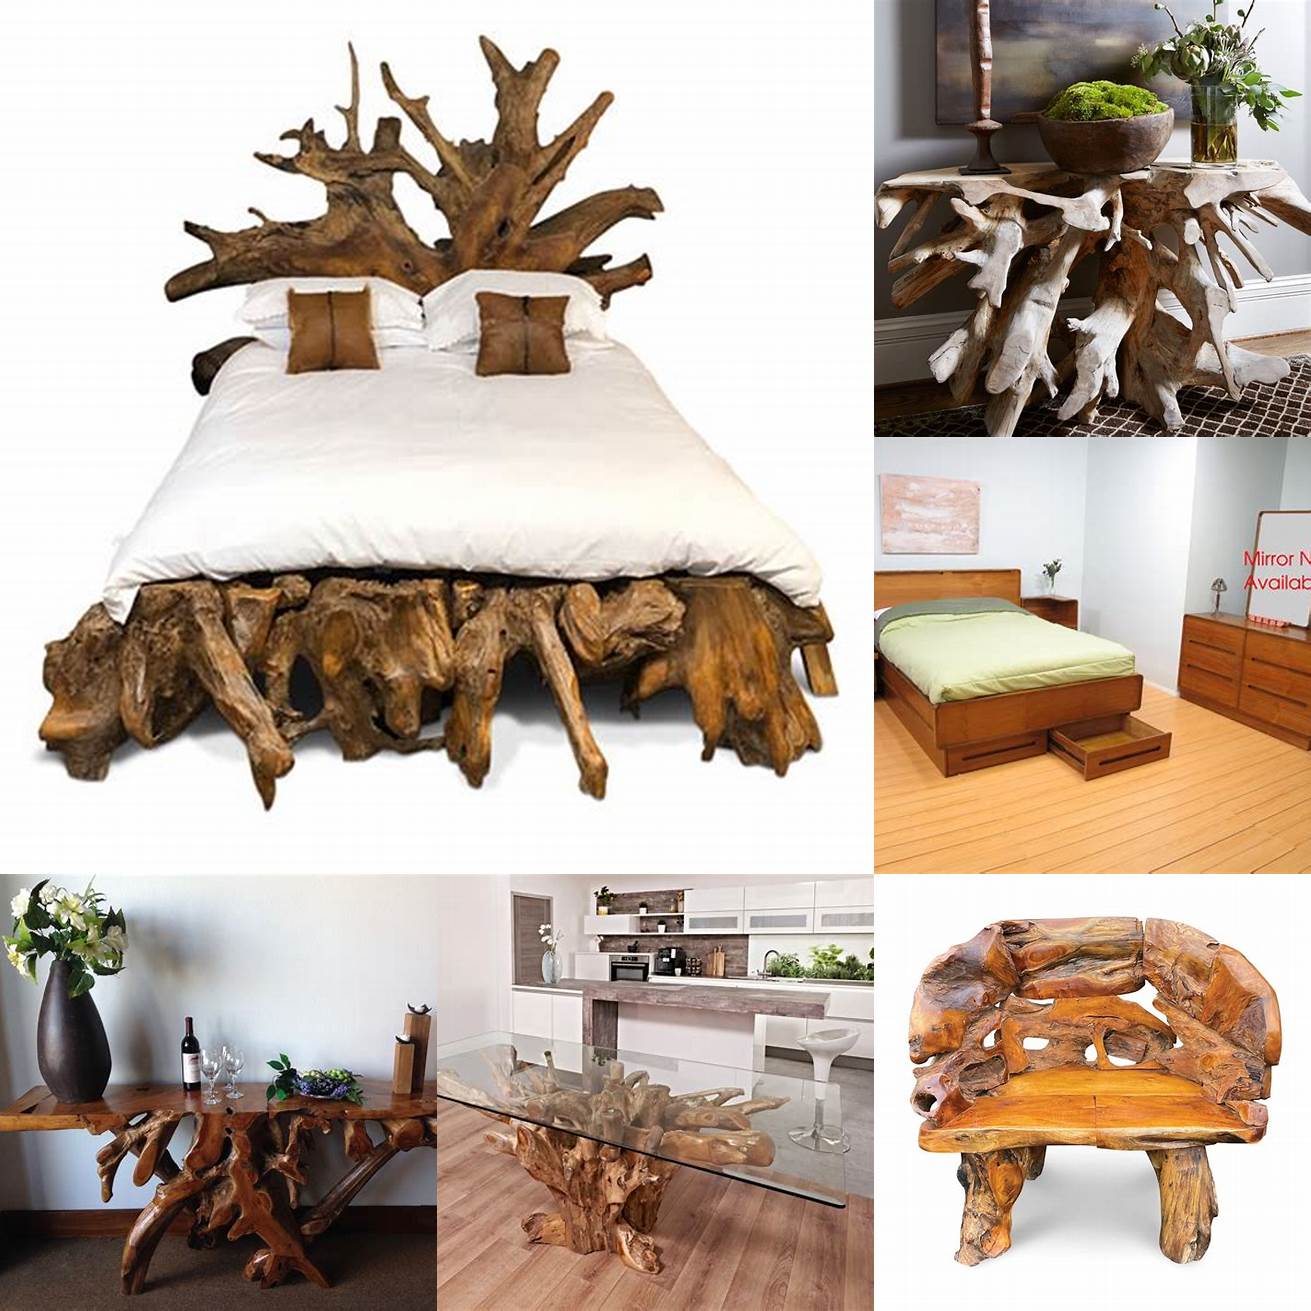 Teak root furniture in a bedroom setting